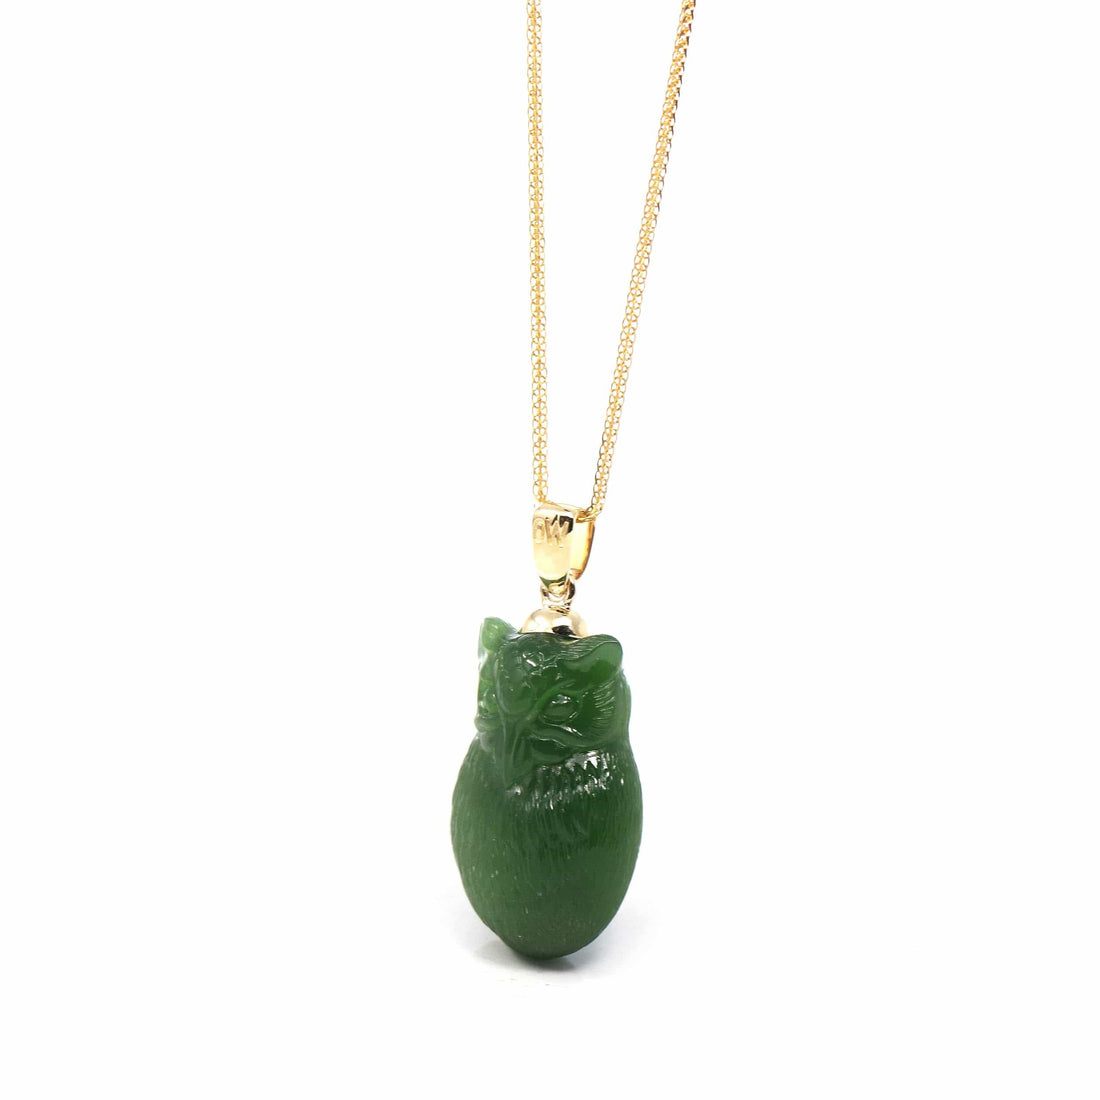 Baikalla Jewelry God Jadeite Jade Necklace Pendant Only Copy of Baikalla Genuine Green Nephrite Jade Lucky Owl Pendant Necklace With 14k Yellow Gold Bail